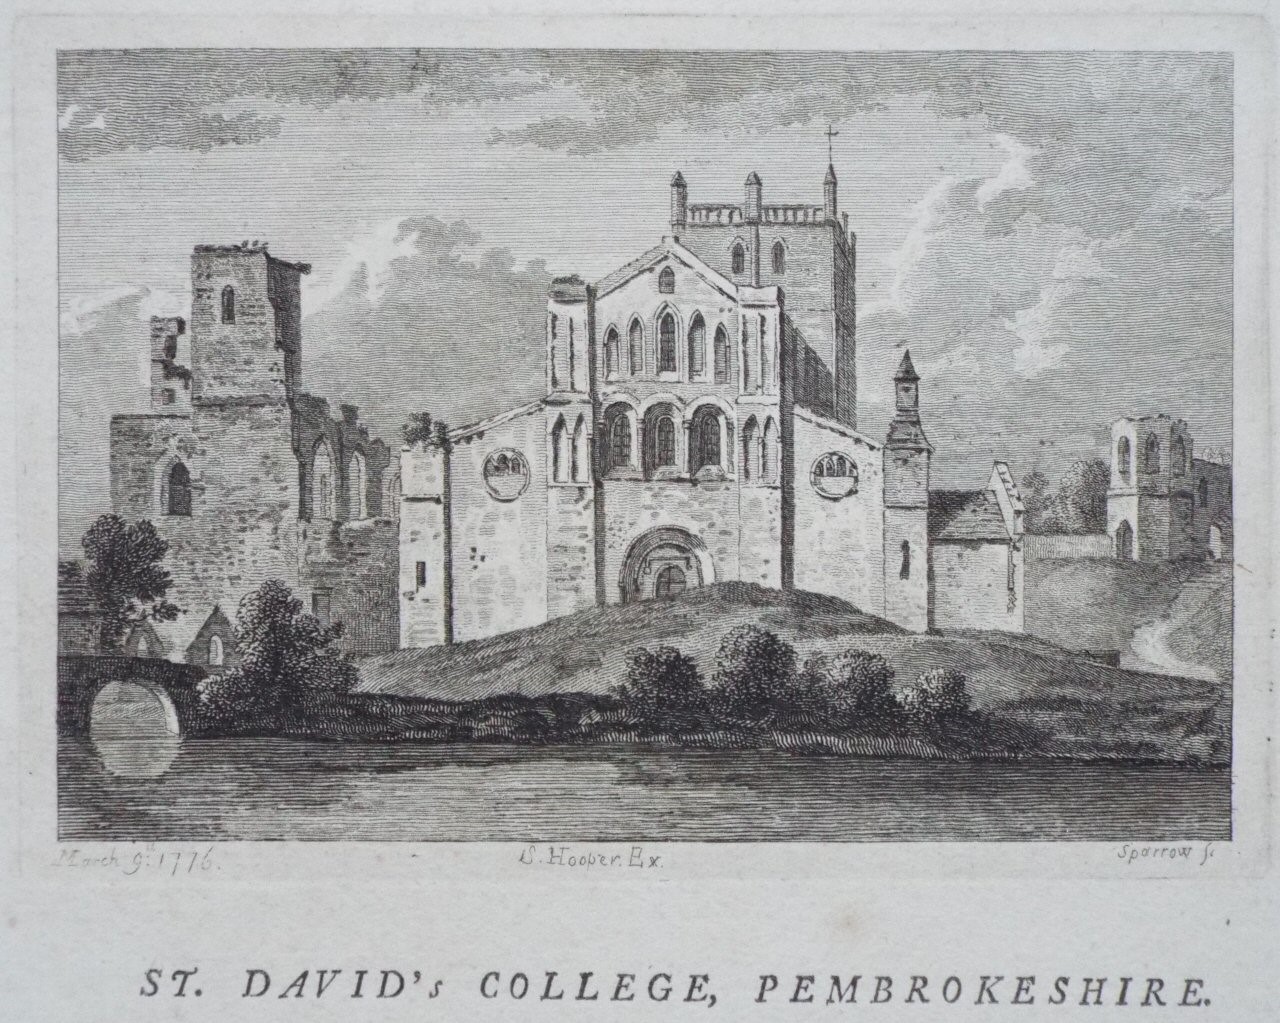 Print - St. David's College, Pembrokeshire. - 